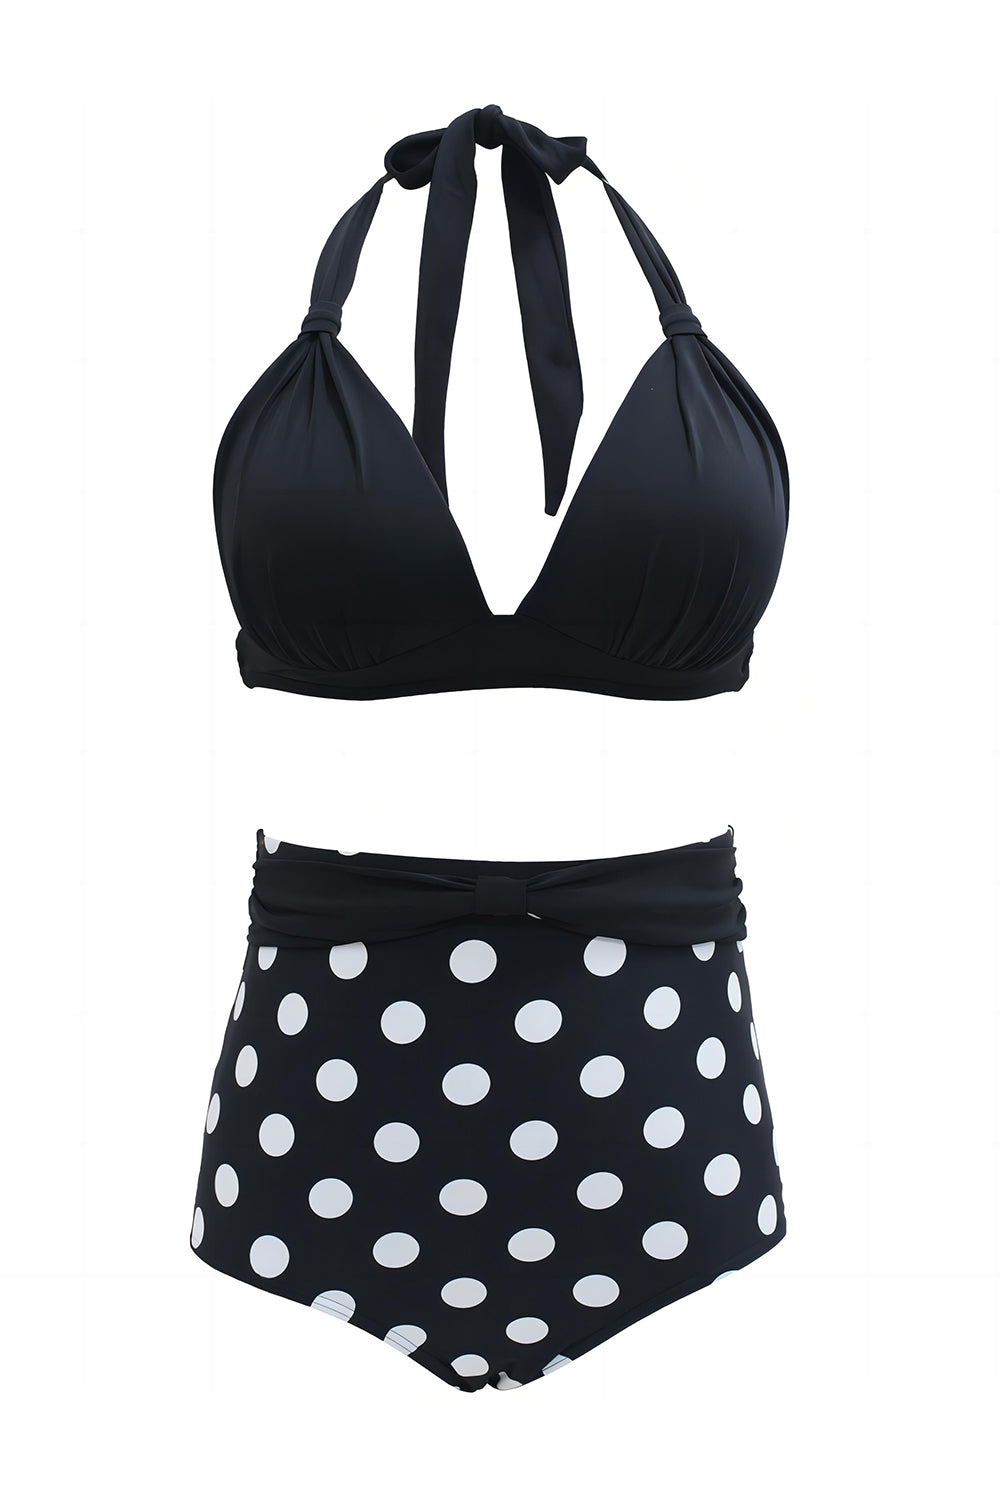 Zapaka Women Black Swimsuit Two Piece Polka Dots Halter Swimwear – ZAPAKA